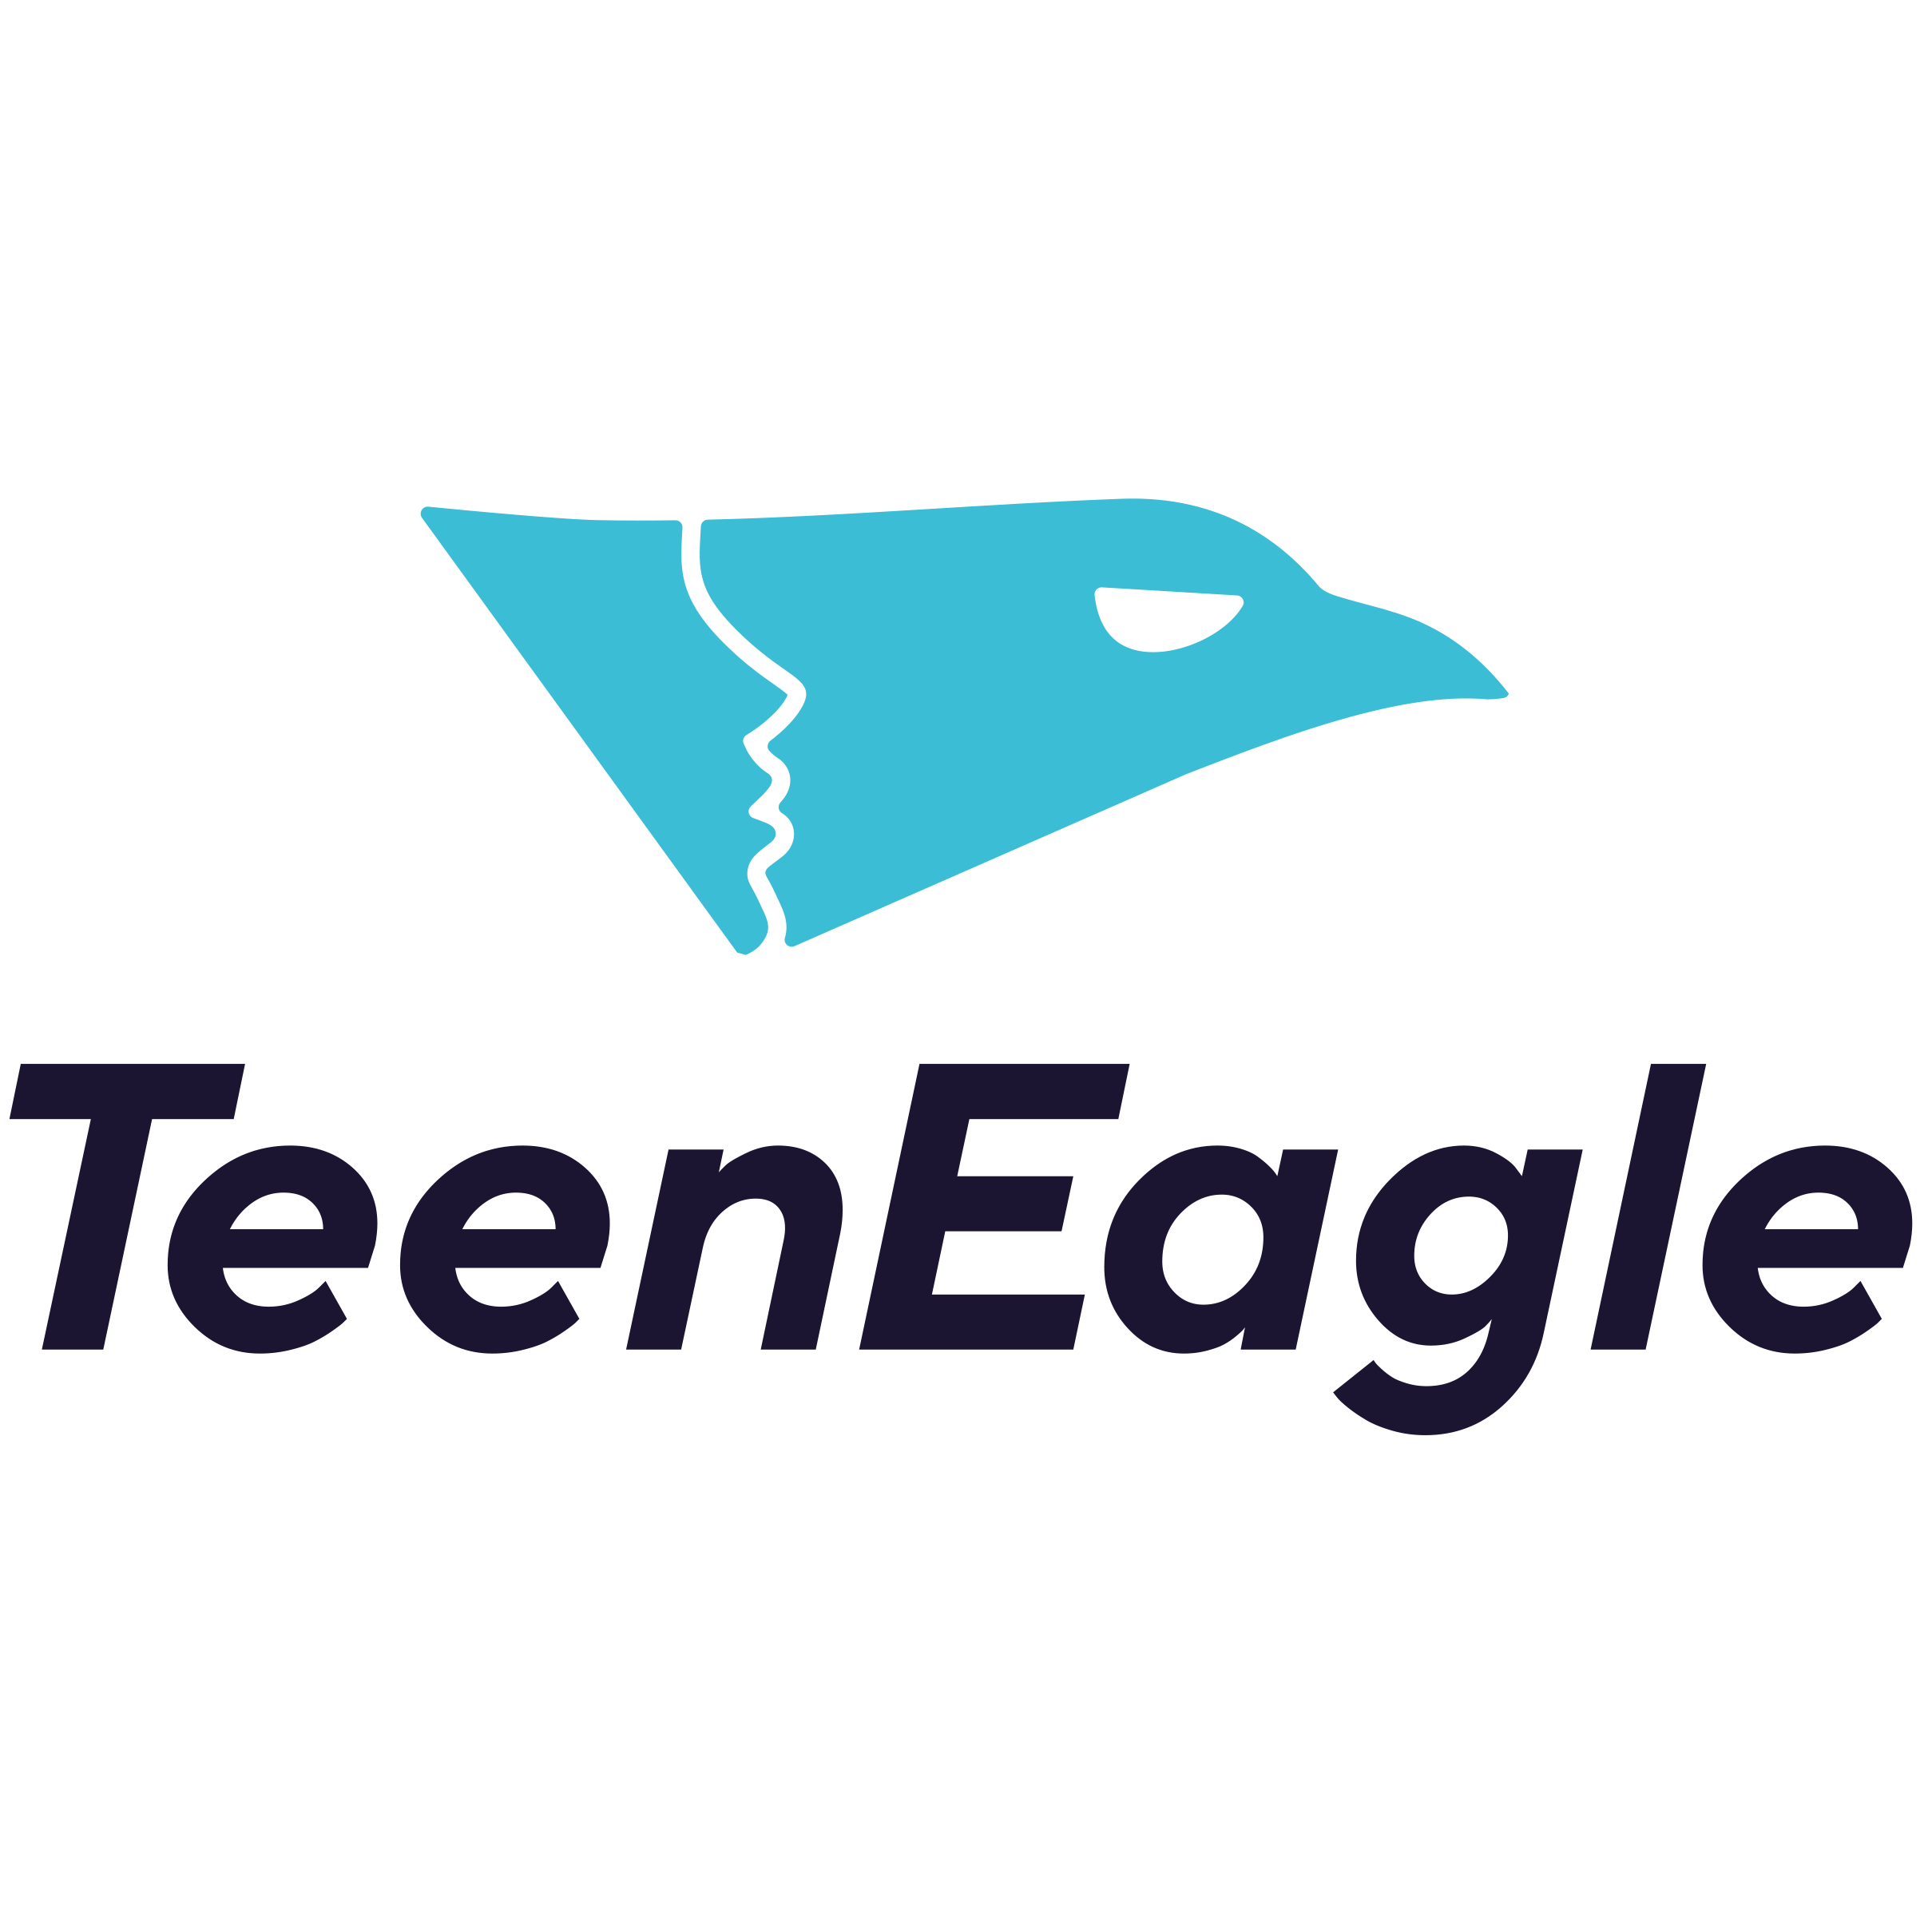 TeenEagle logo